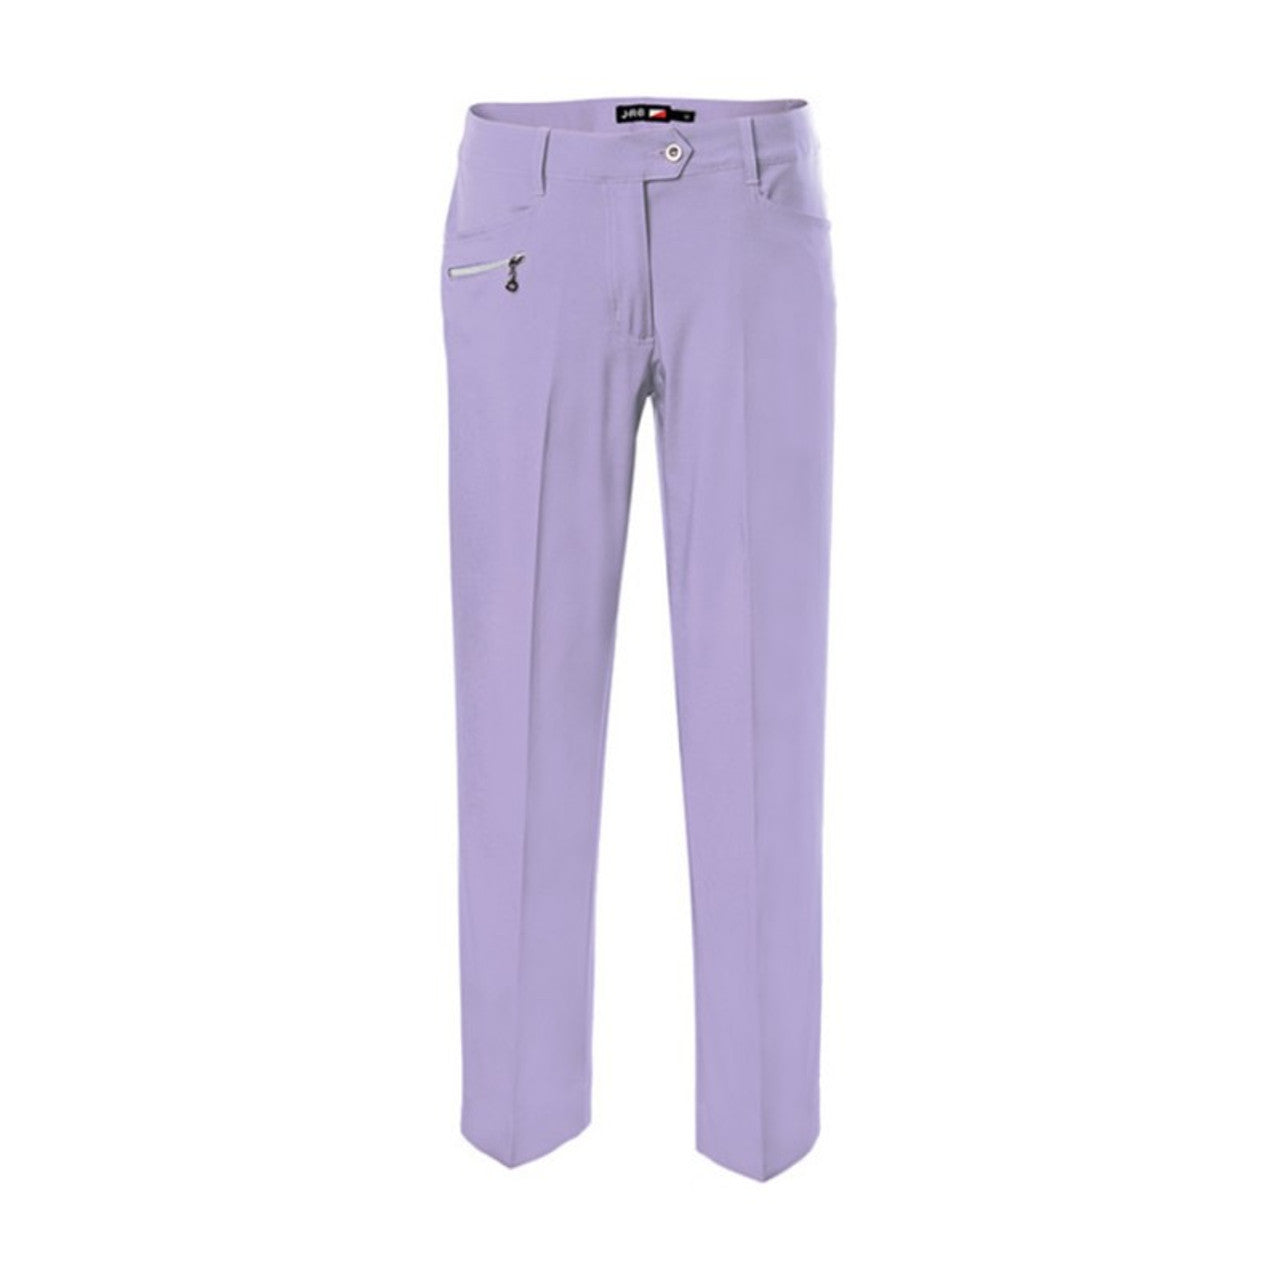 JRB Ladies Dri-Fit Golf Trouser - Lavender (31" Leg)